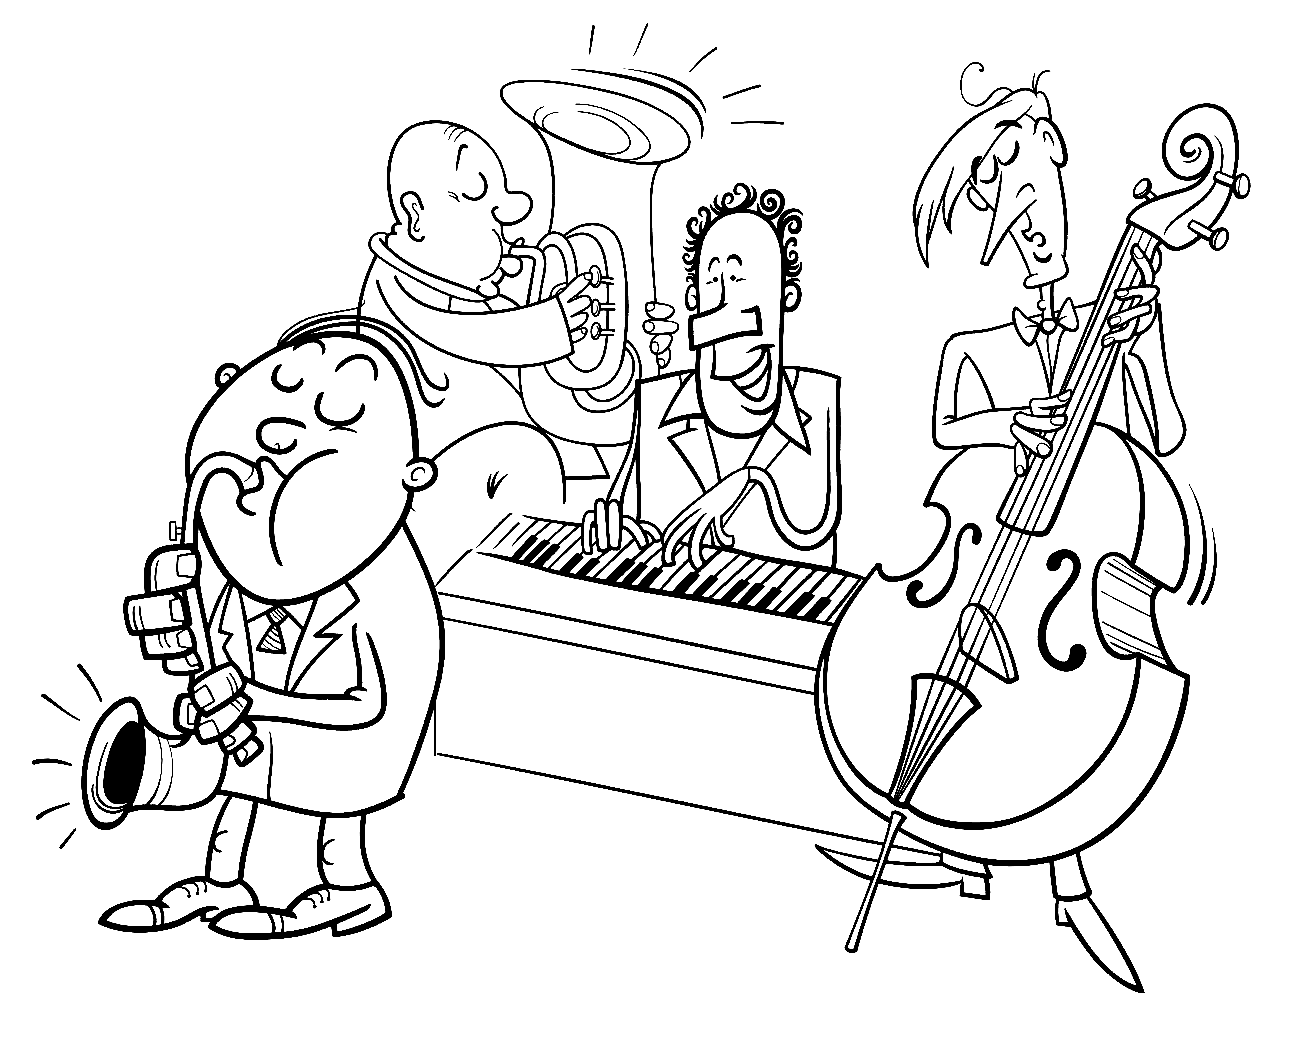 Cartoon Jazz Musicians Band from Jazz